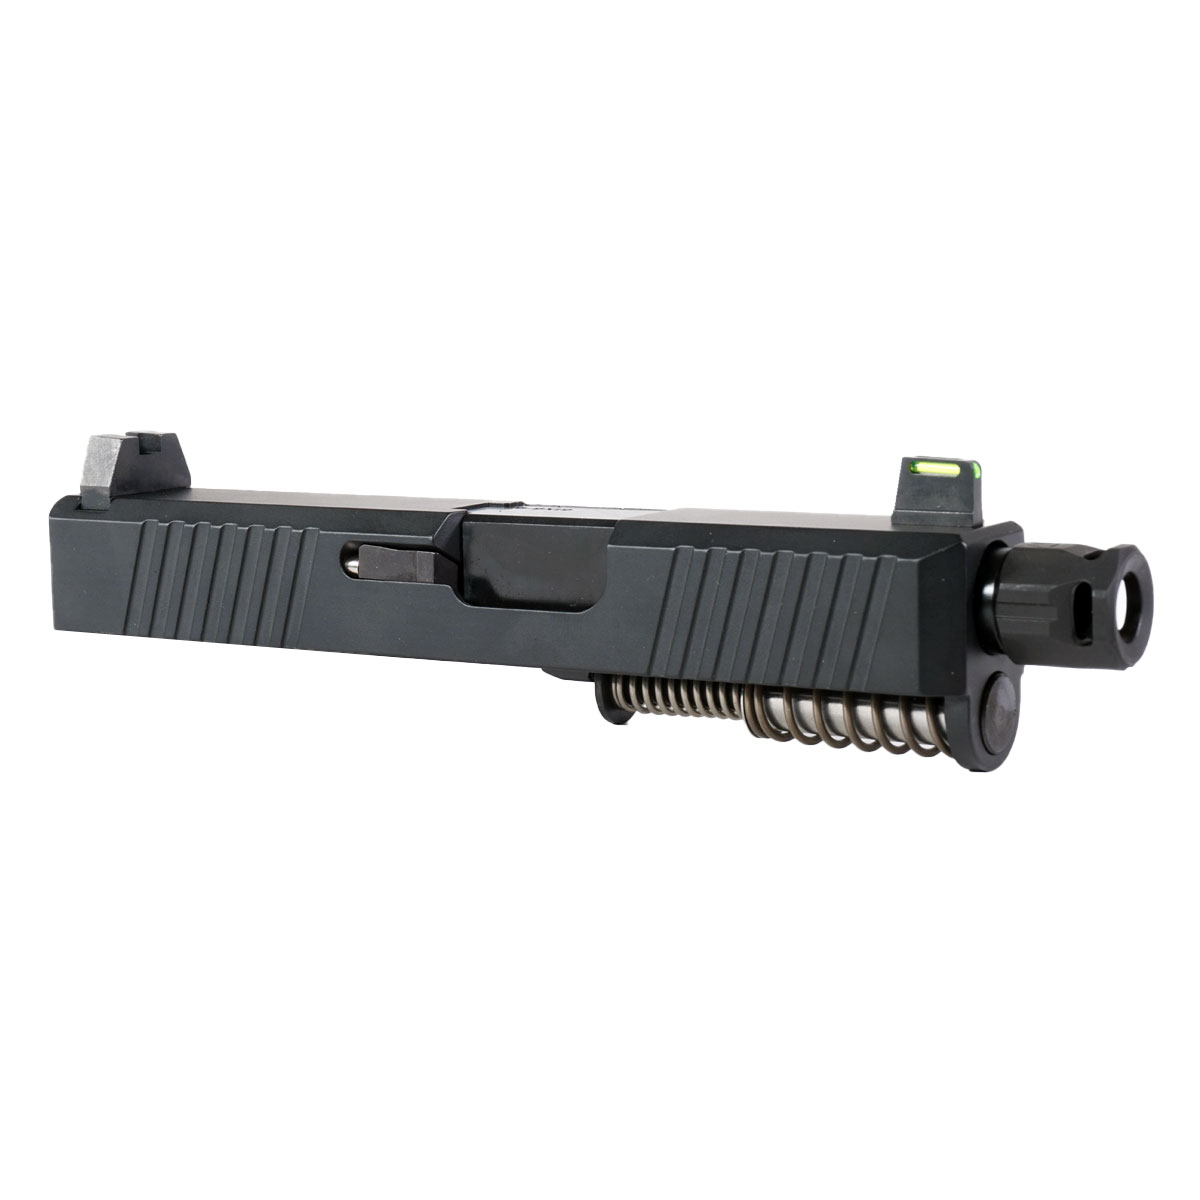 OTD 'Providence Power' 9mm Complete Slide Kit - Glock 26 Gen 1-3 Compatible